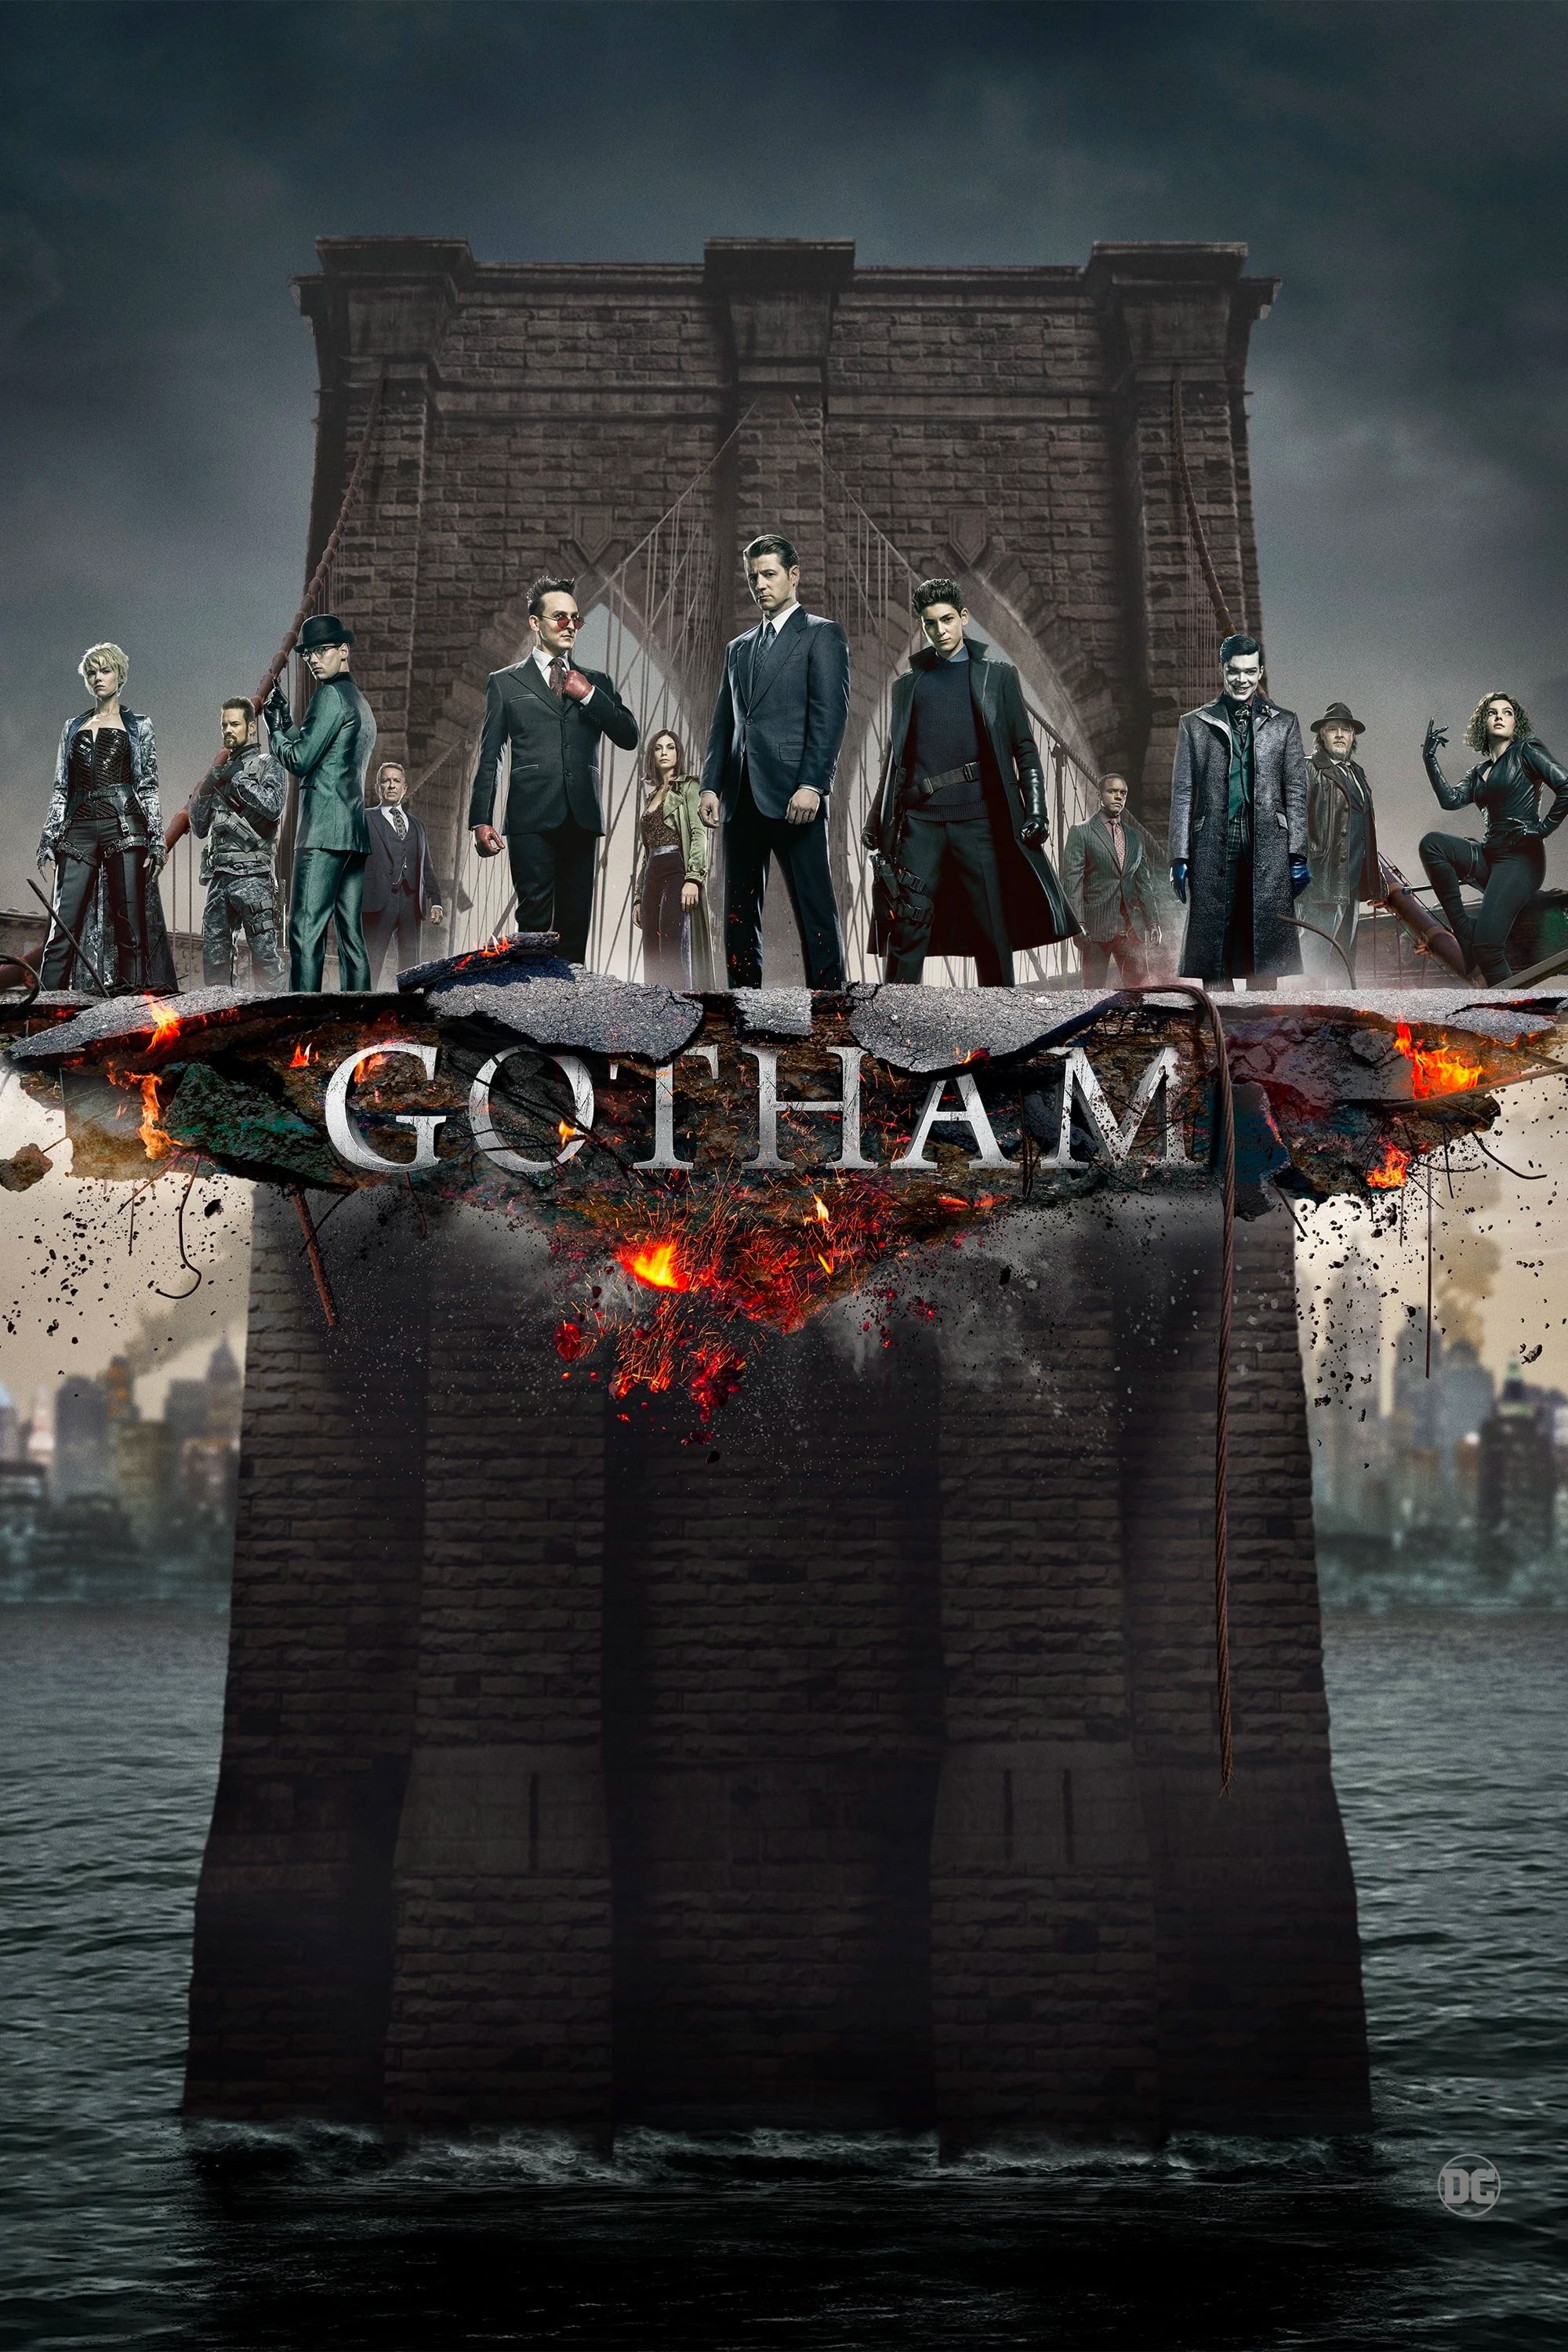 Gotham Season 5 Poster